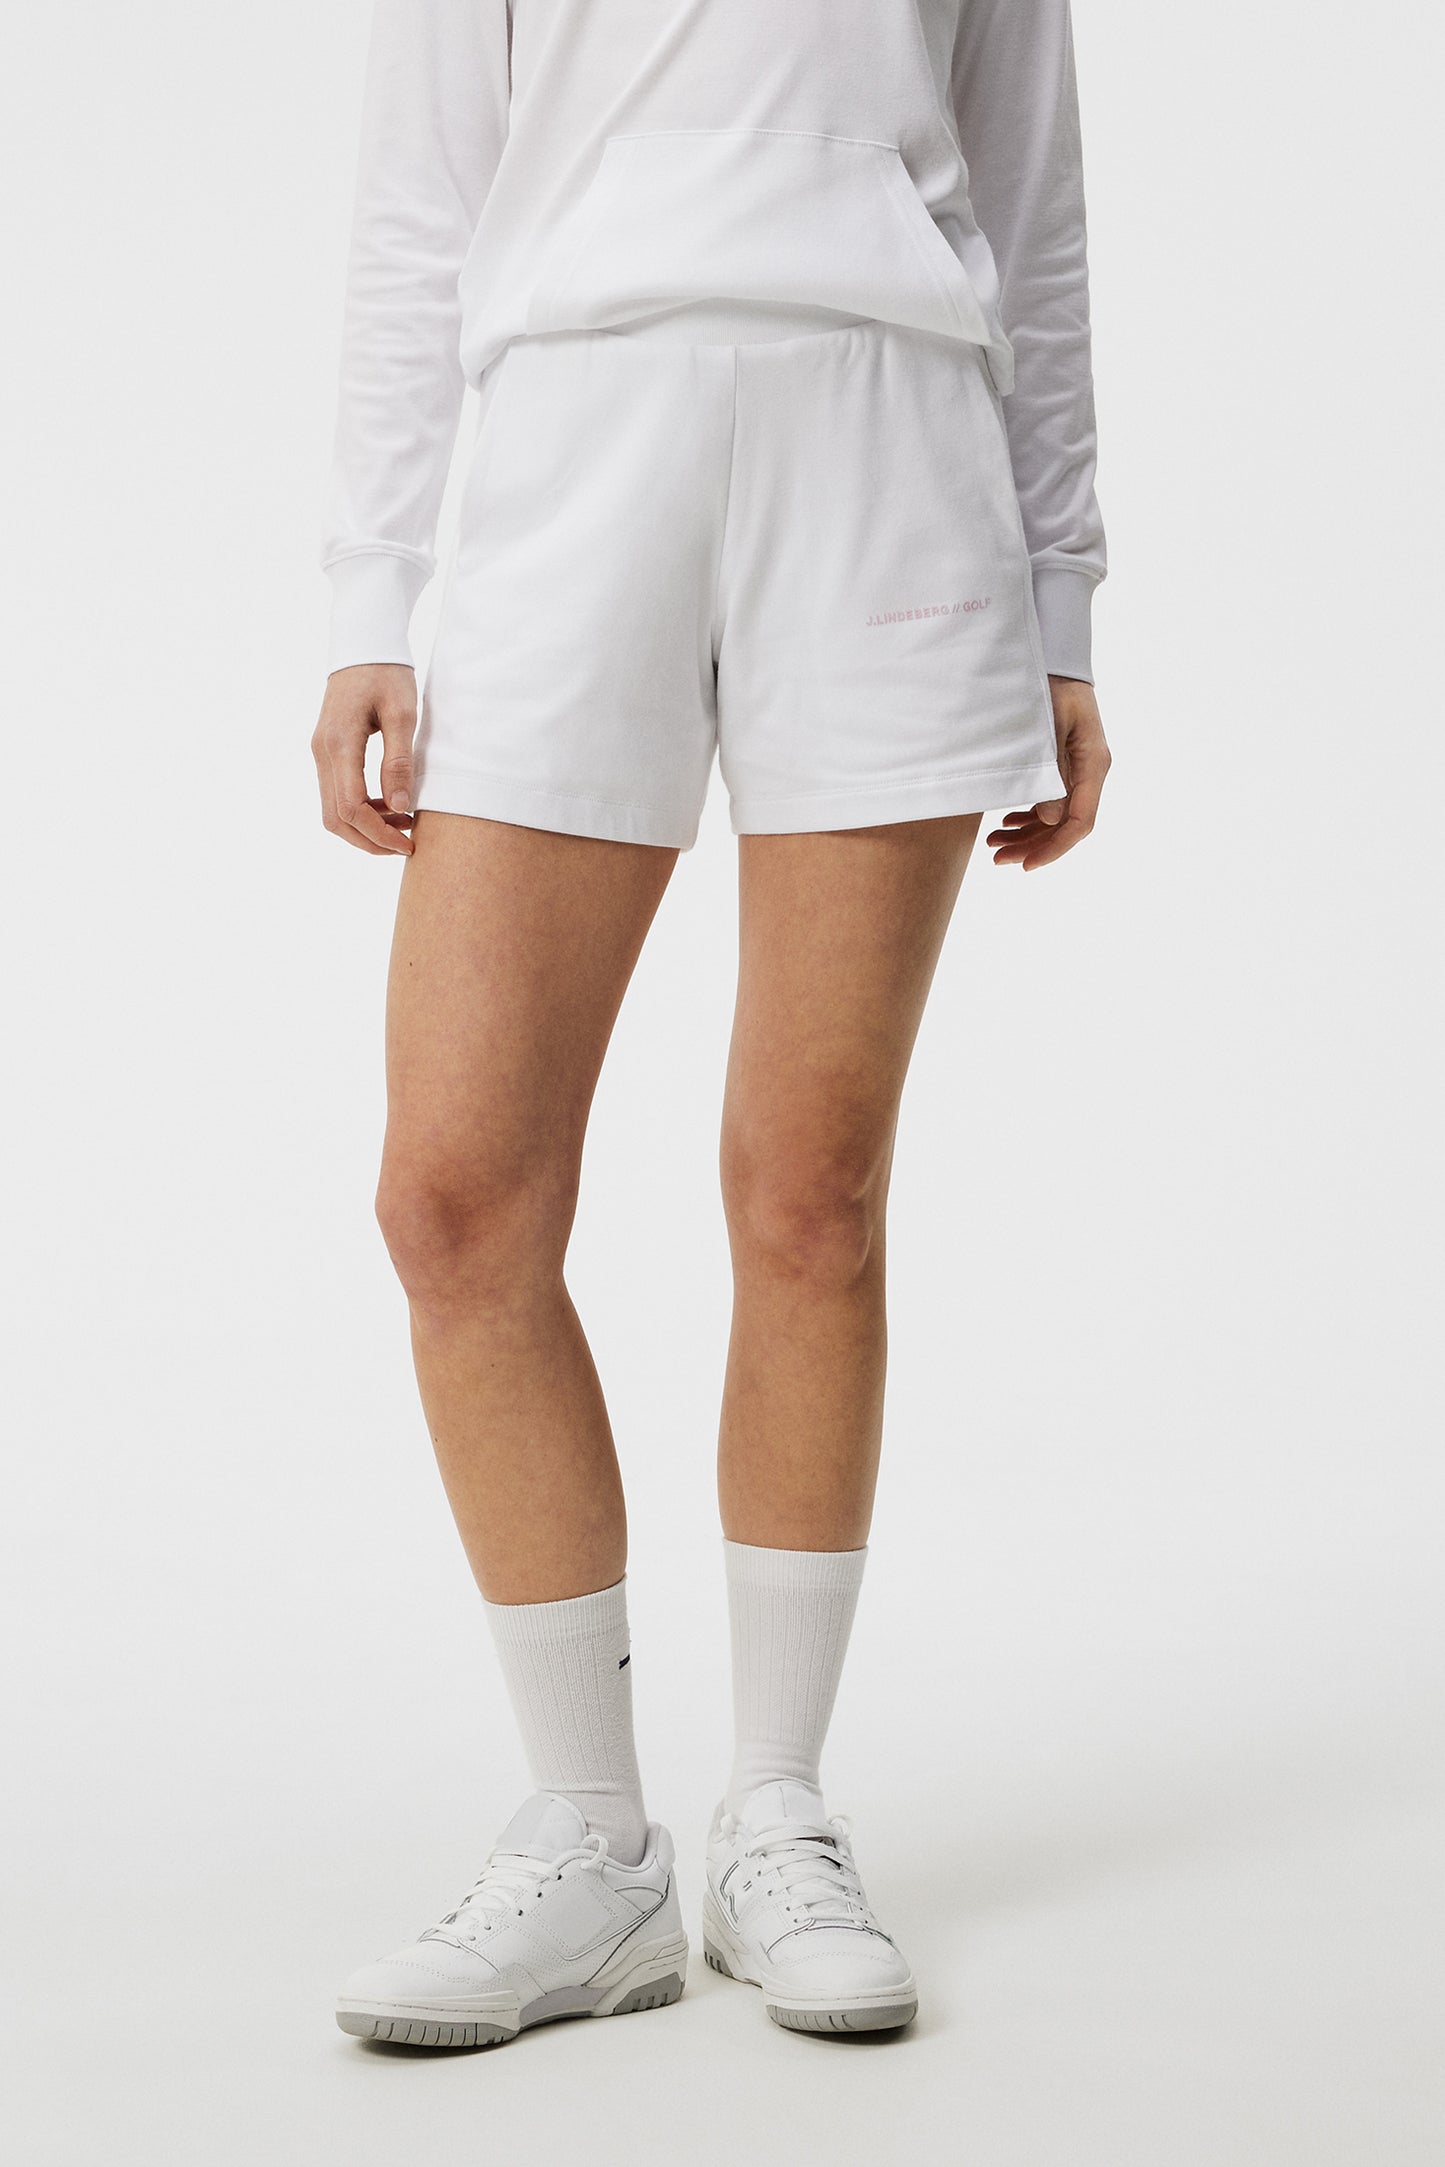 Vice Shorts / White